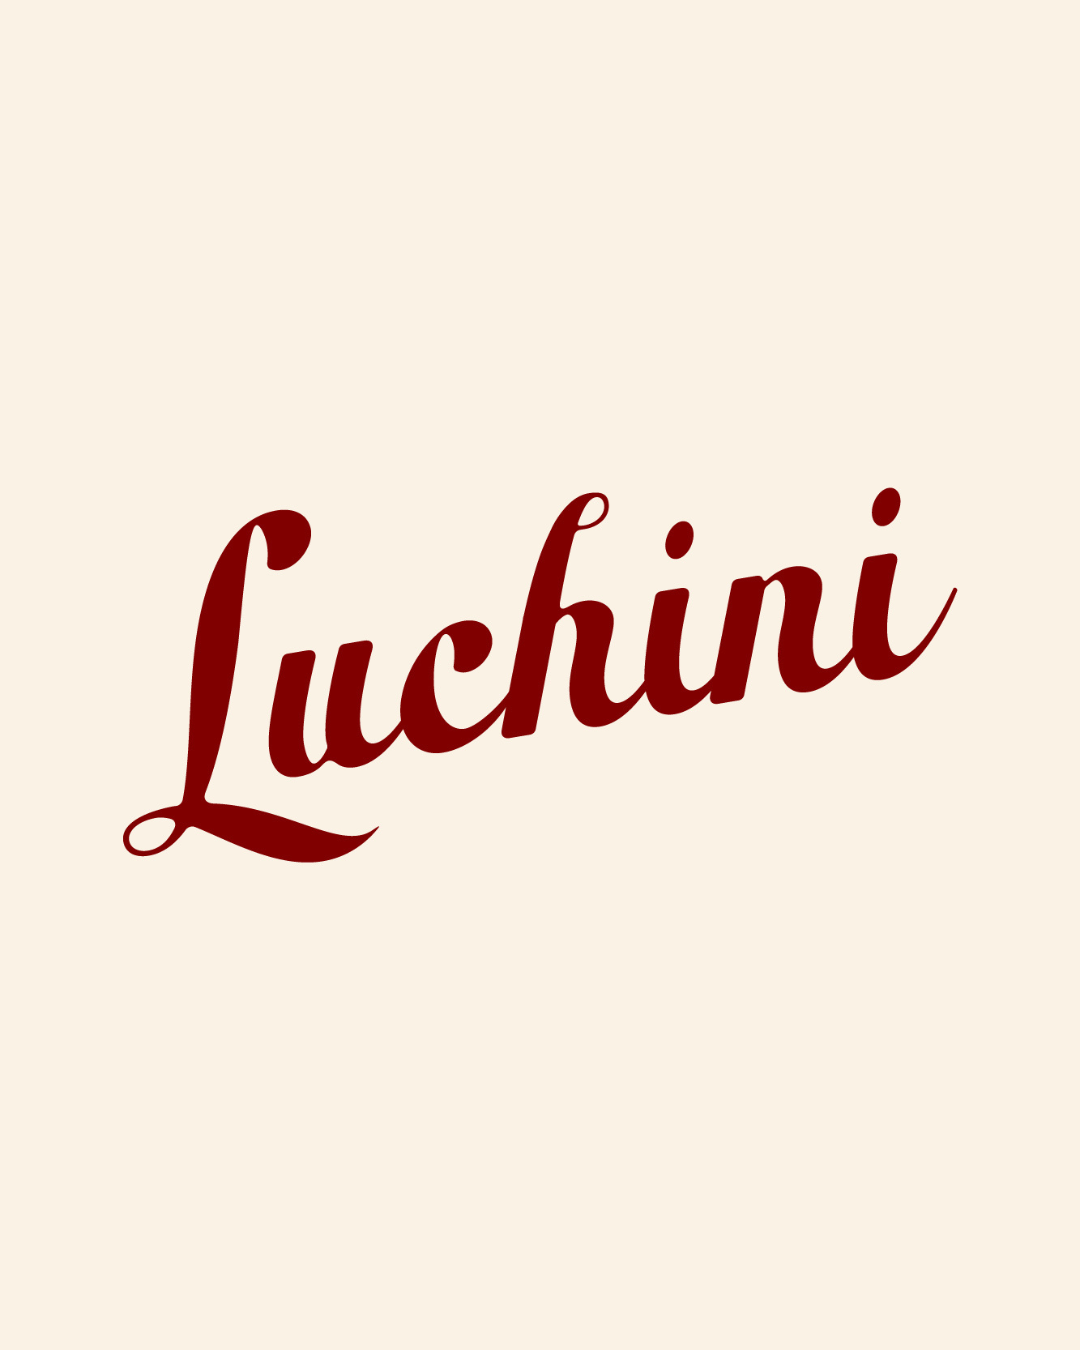 Luchini Restaurant